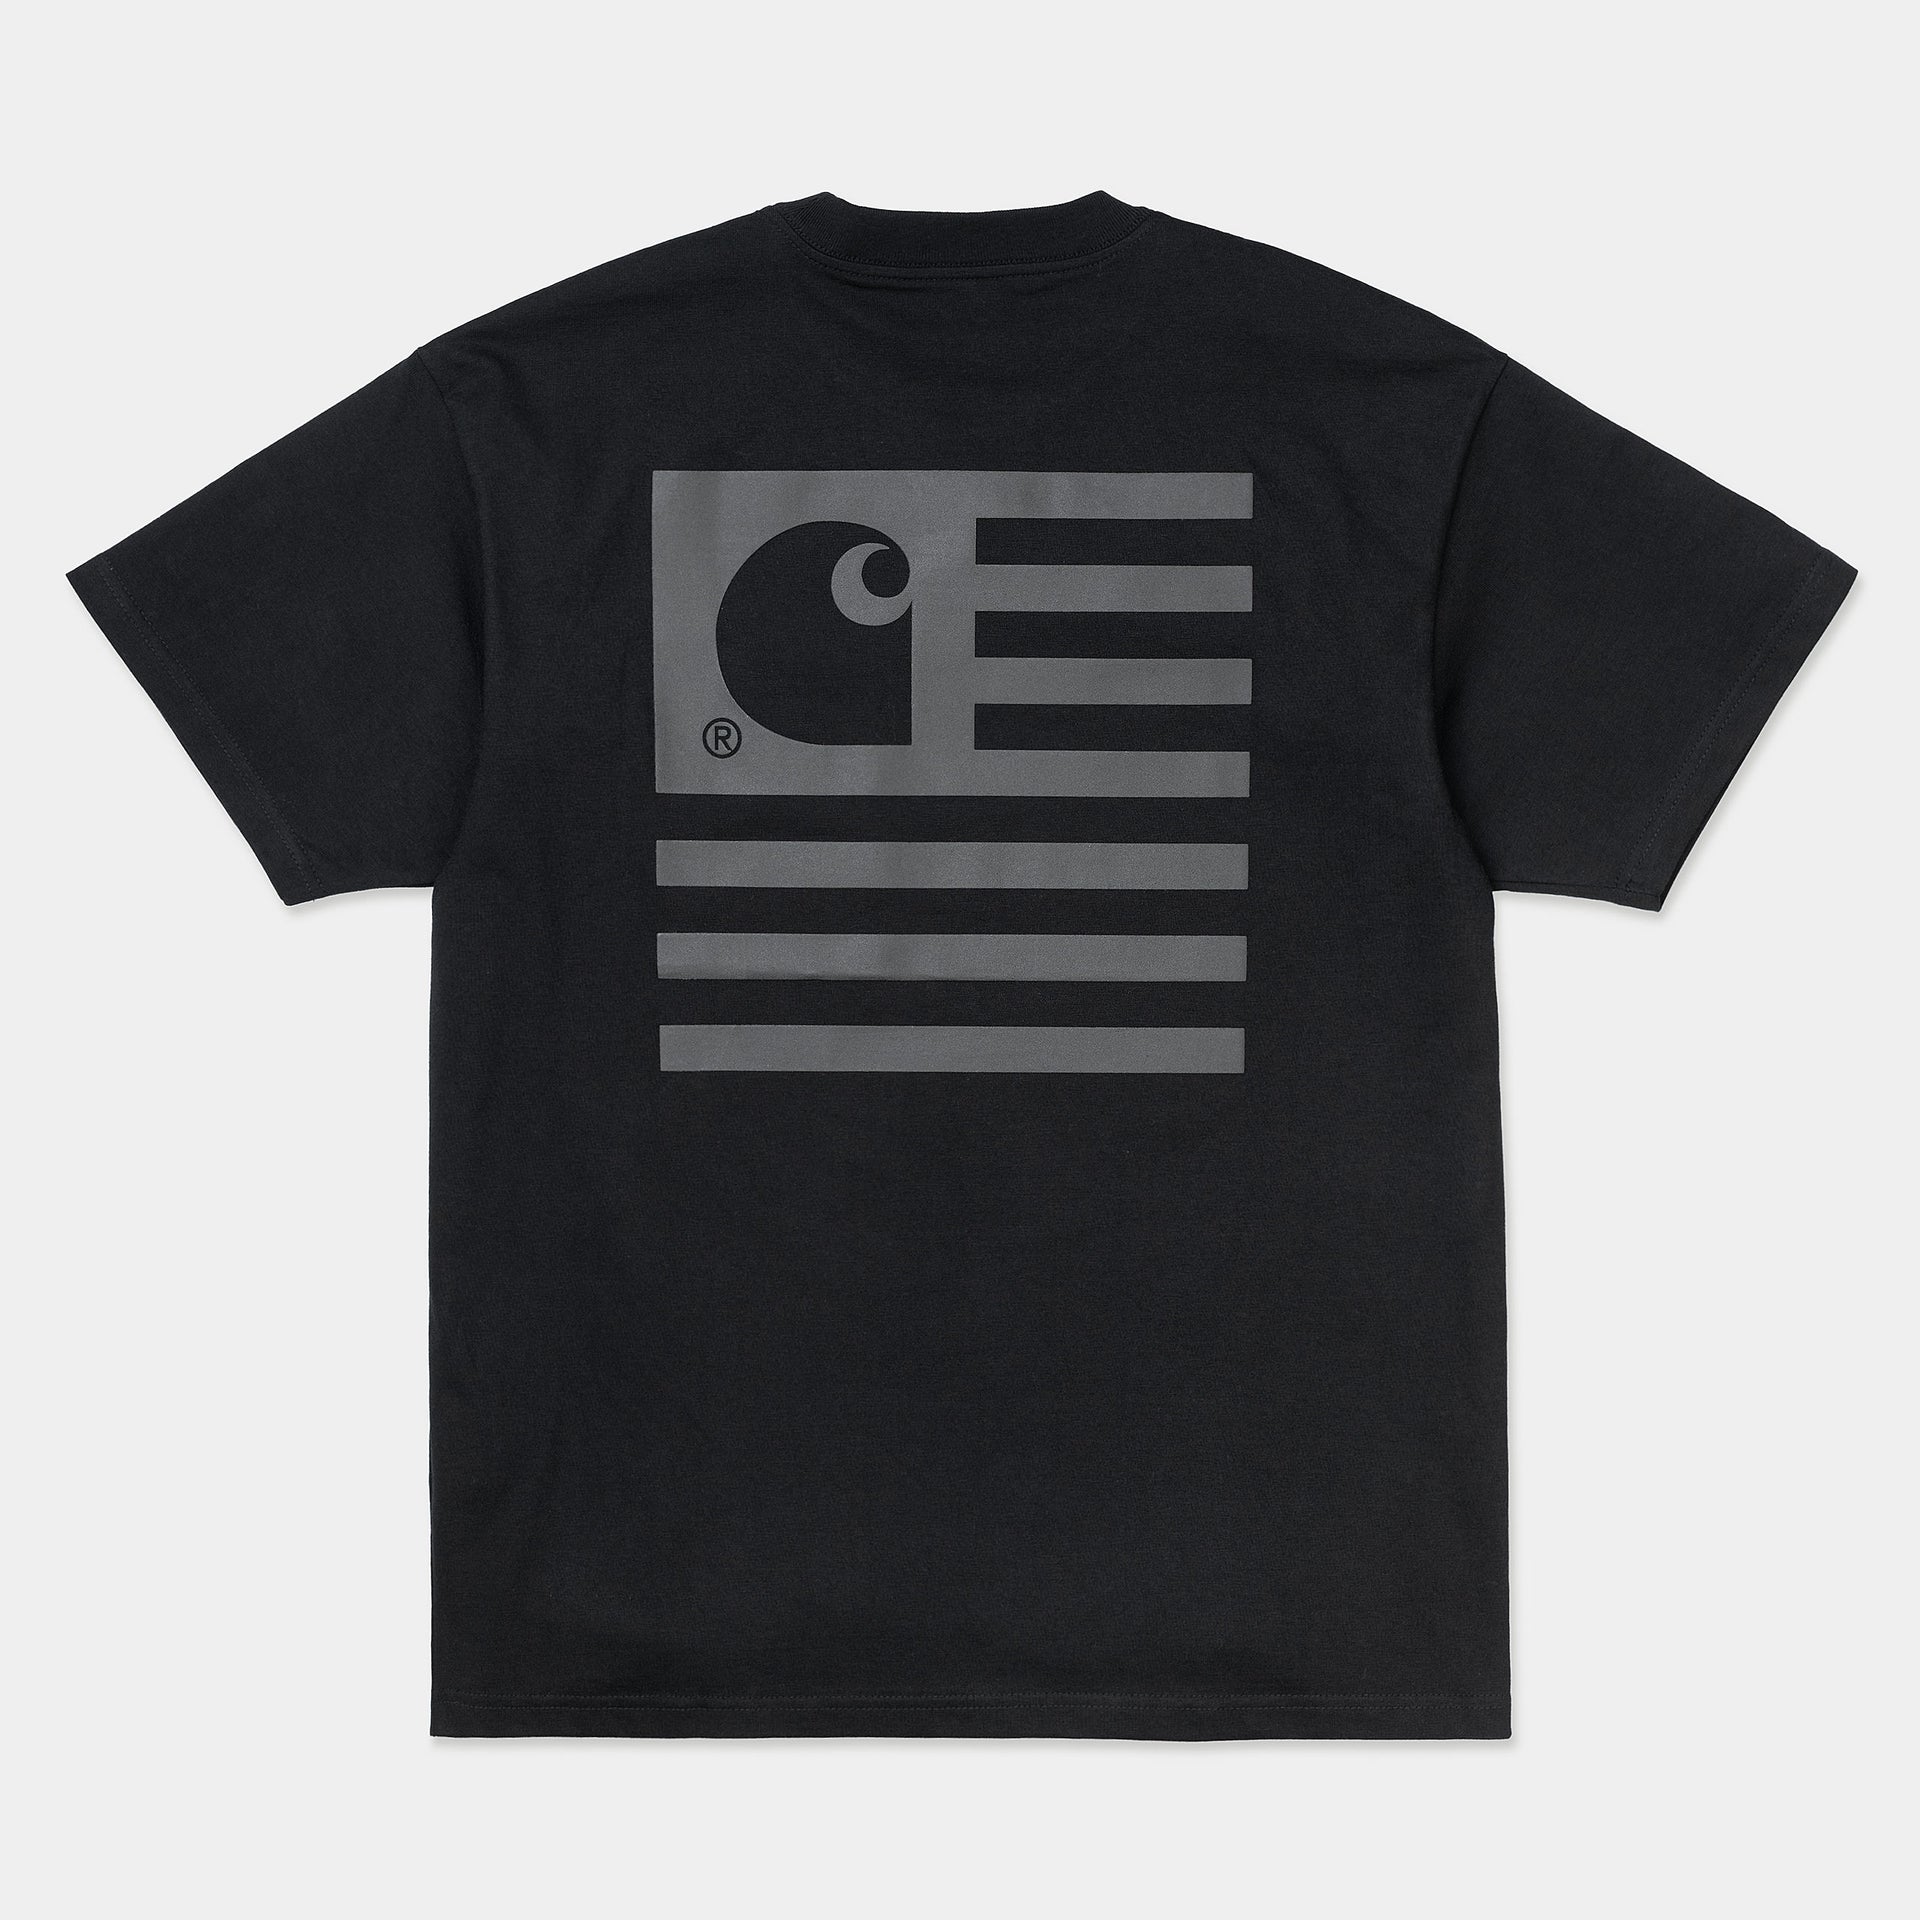 S/S State T-Shirt Black